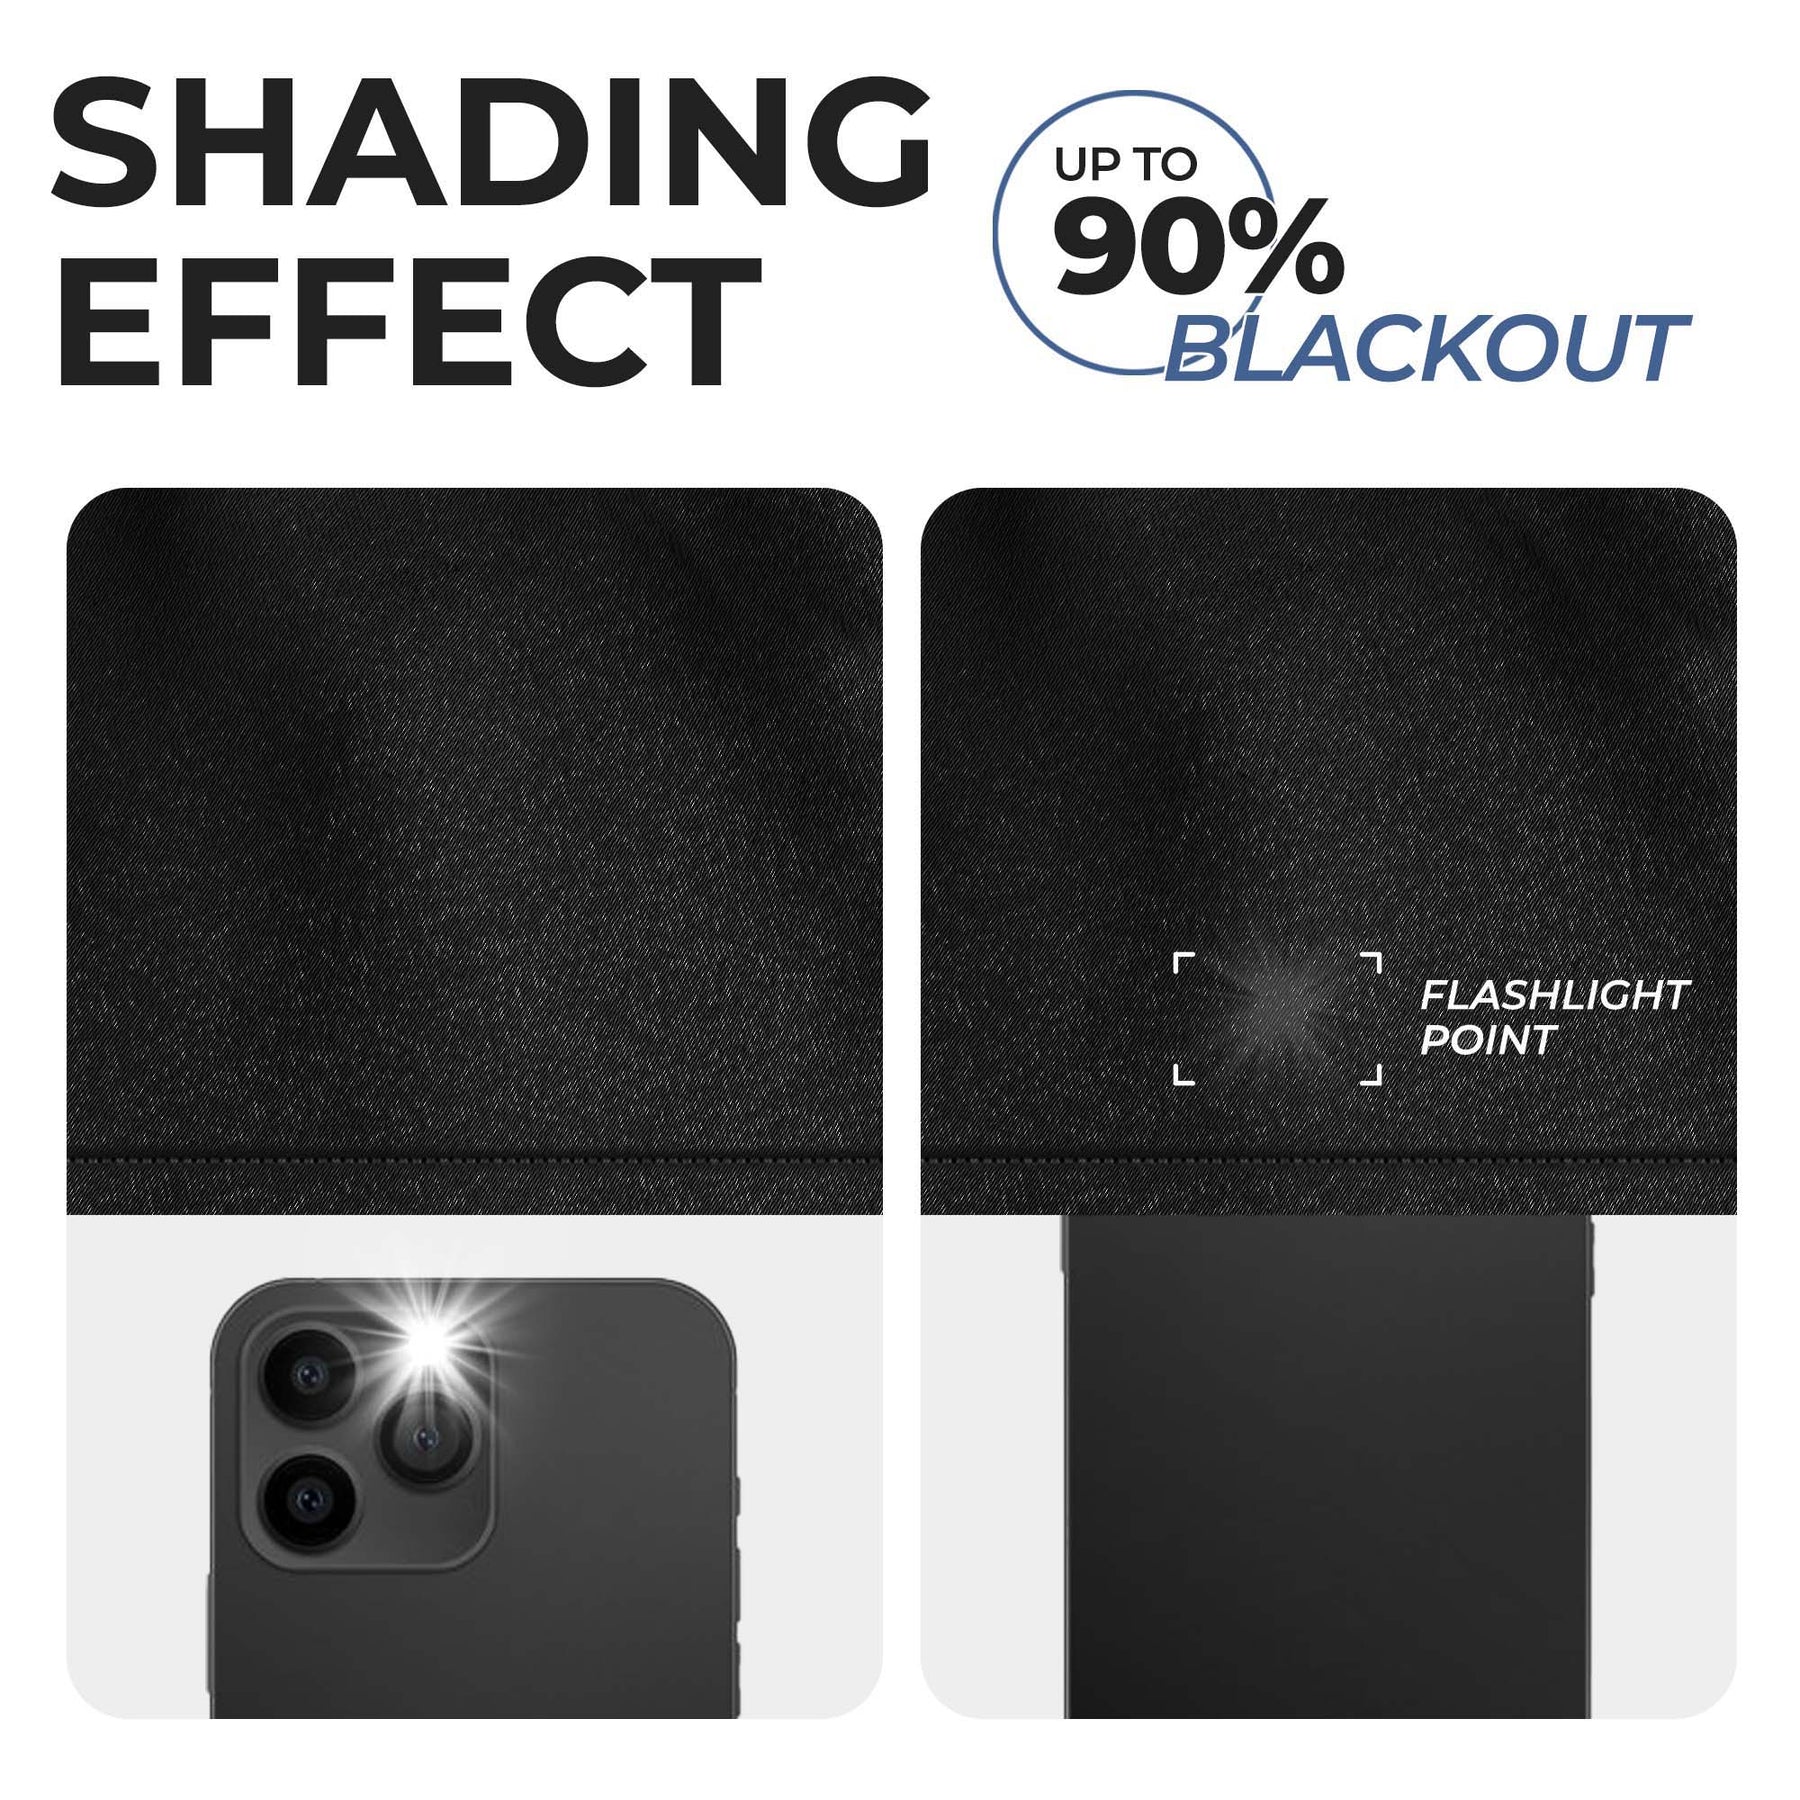 Classic Modern Rod Pocket Solid Blackout Curtain Set - Black